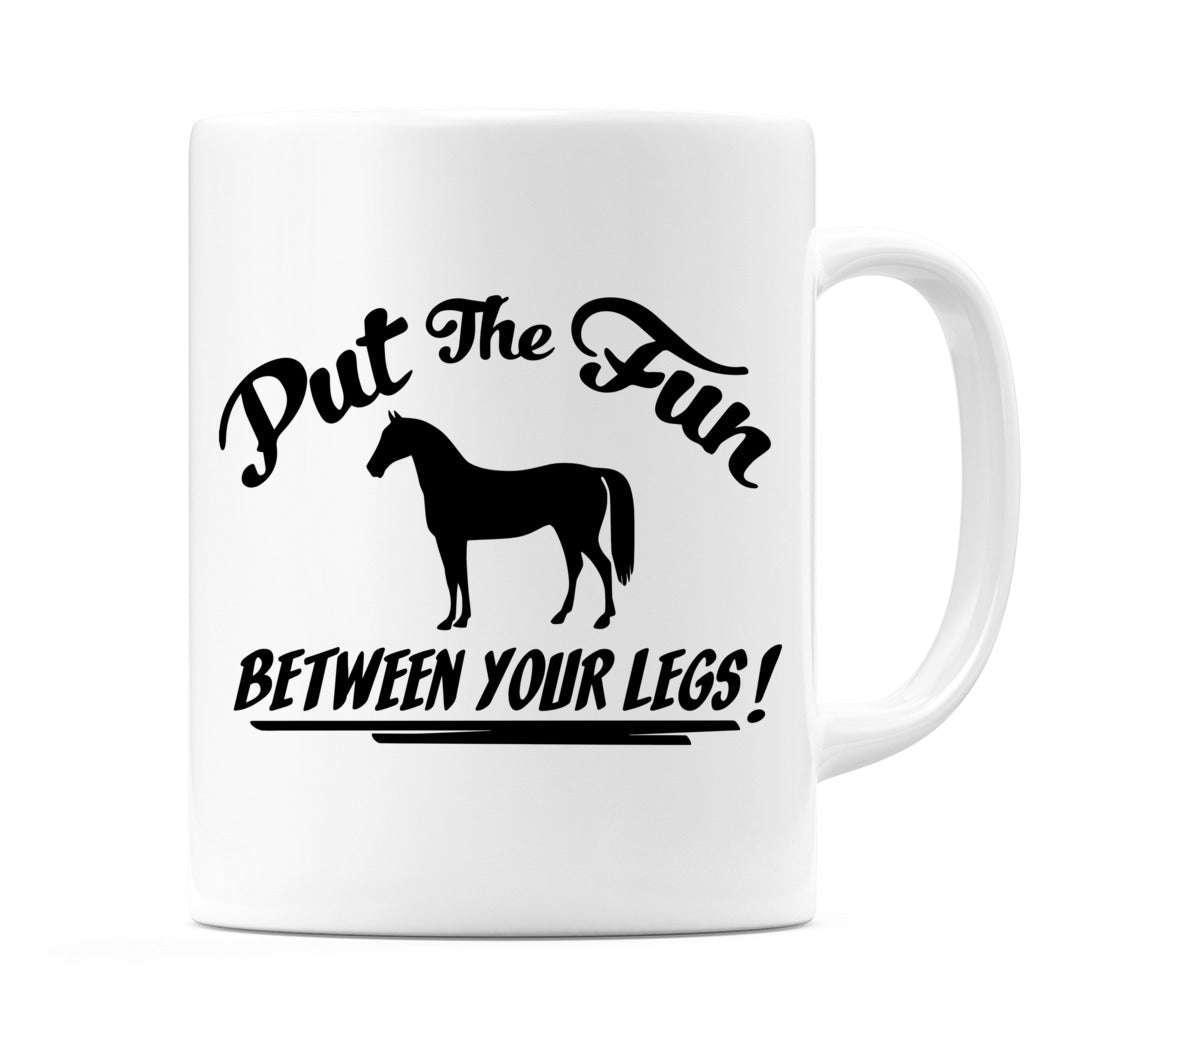 Put The Fun Between Your Legs! (Horse) Mug